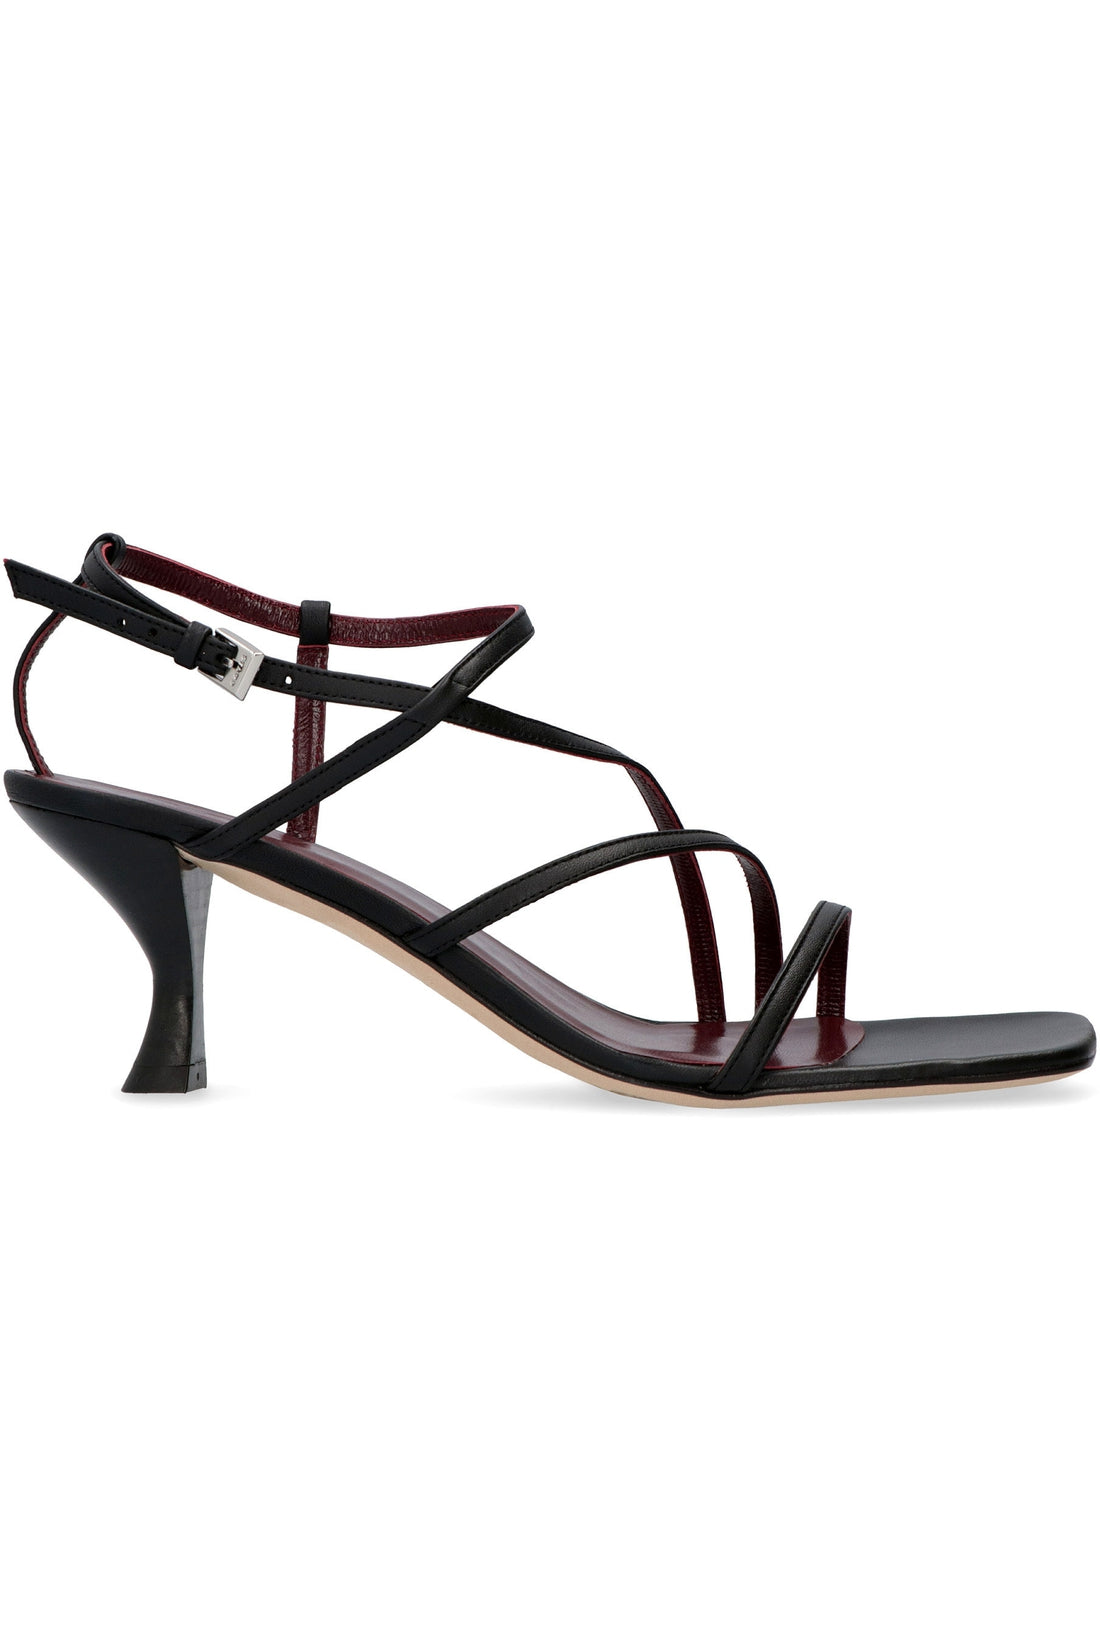 STAUD-OUTLET-SALE-Gita leather sandals-ARCHIVIST